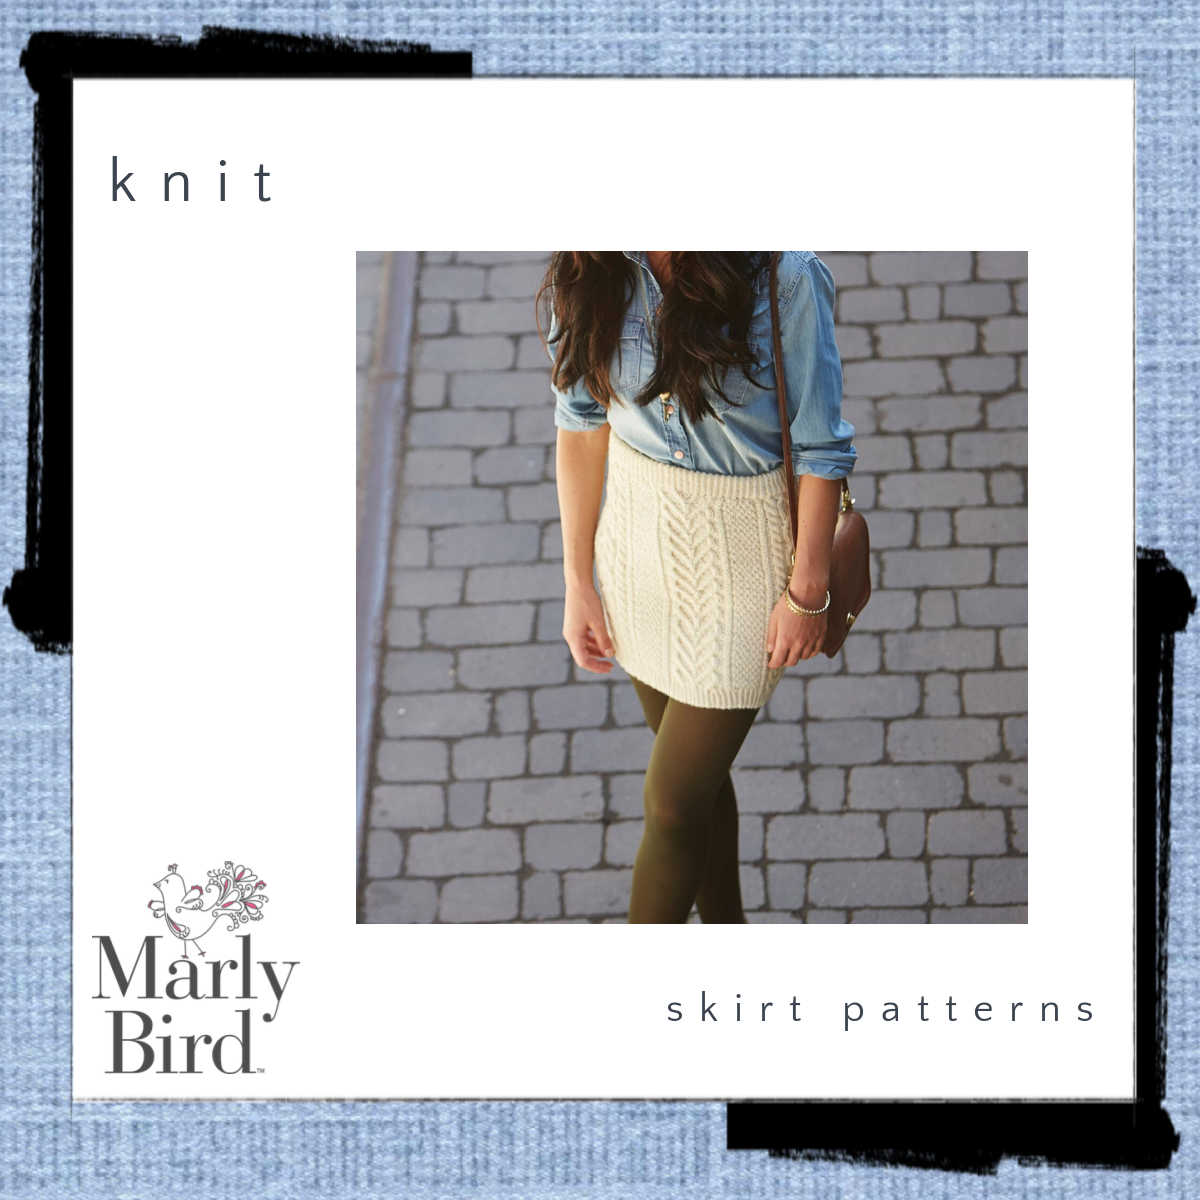 knit skirt patterns - Marly Bird